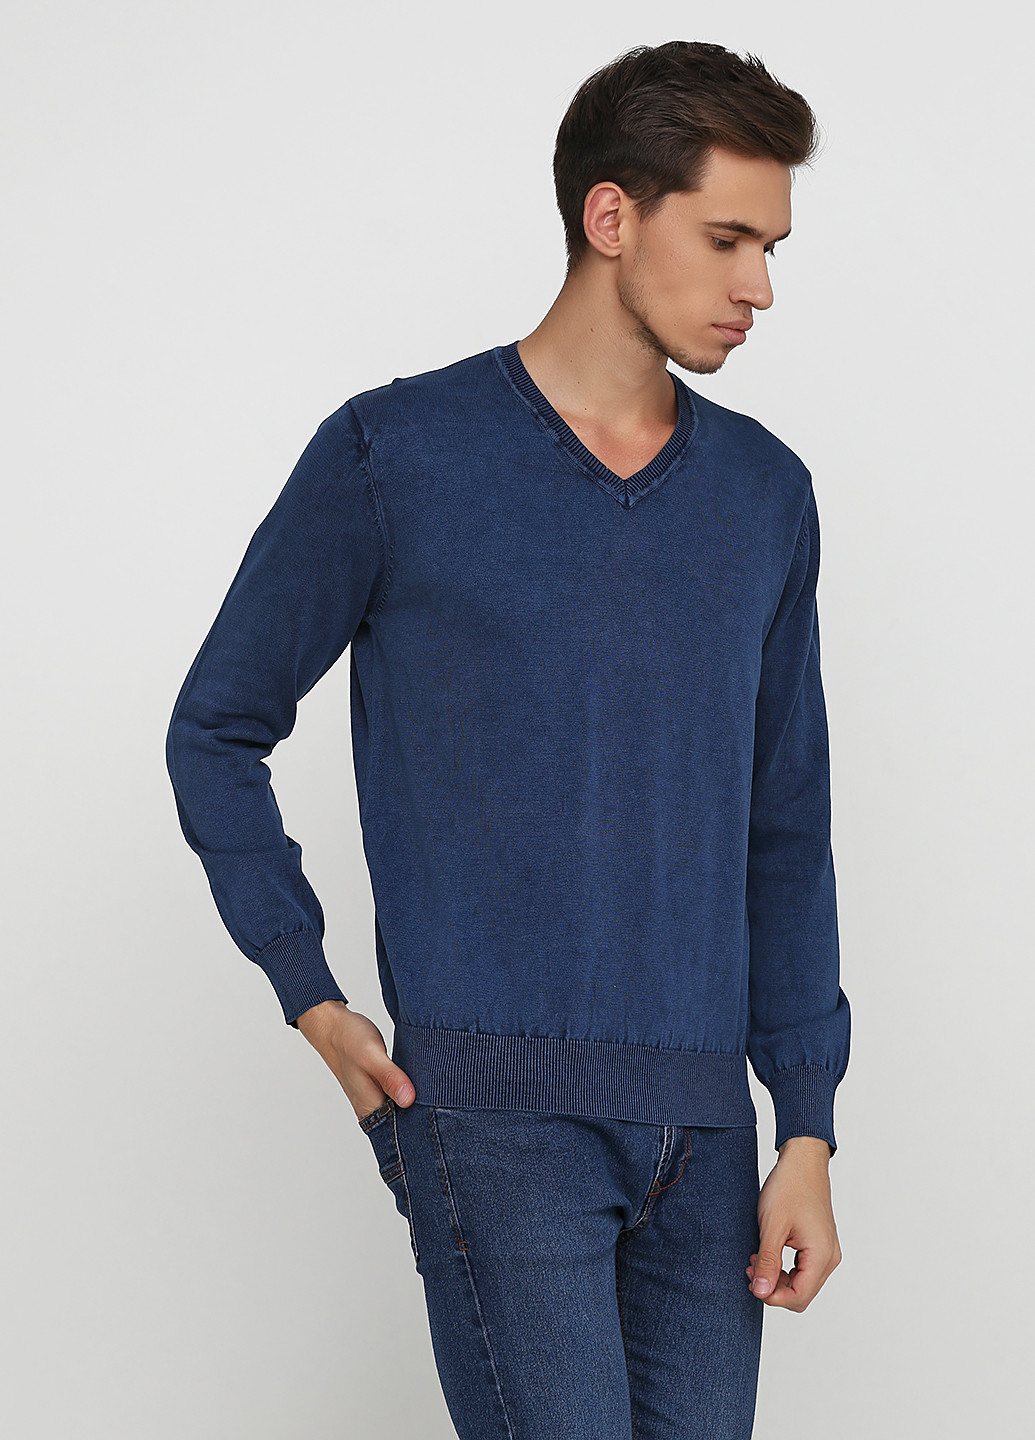 Синий демисезонный пуловер пуловер Cashmere Company